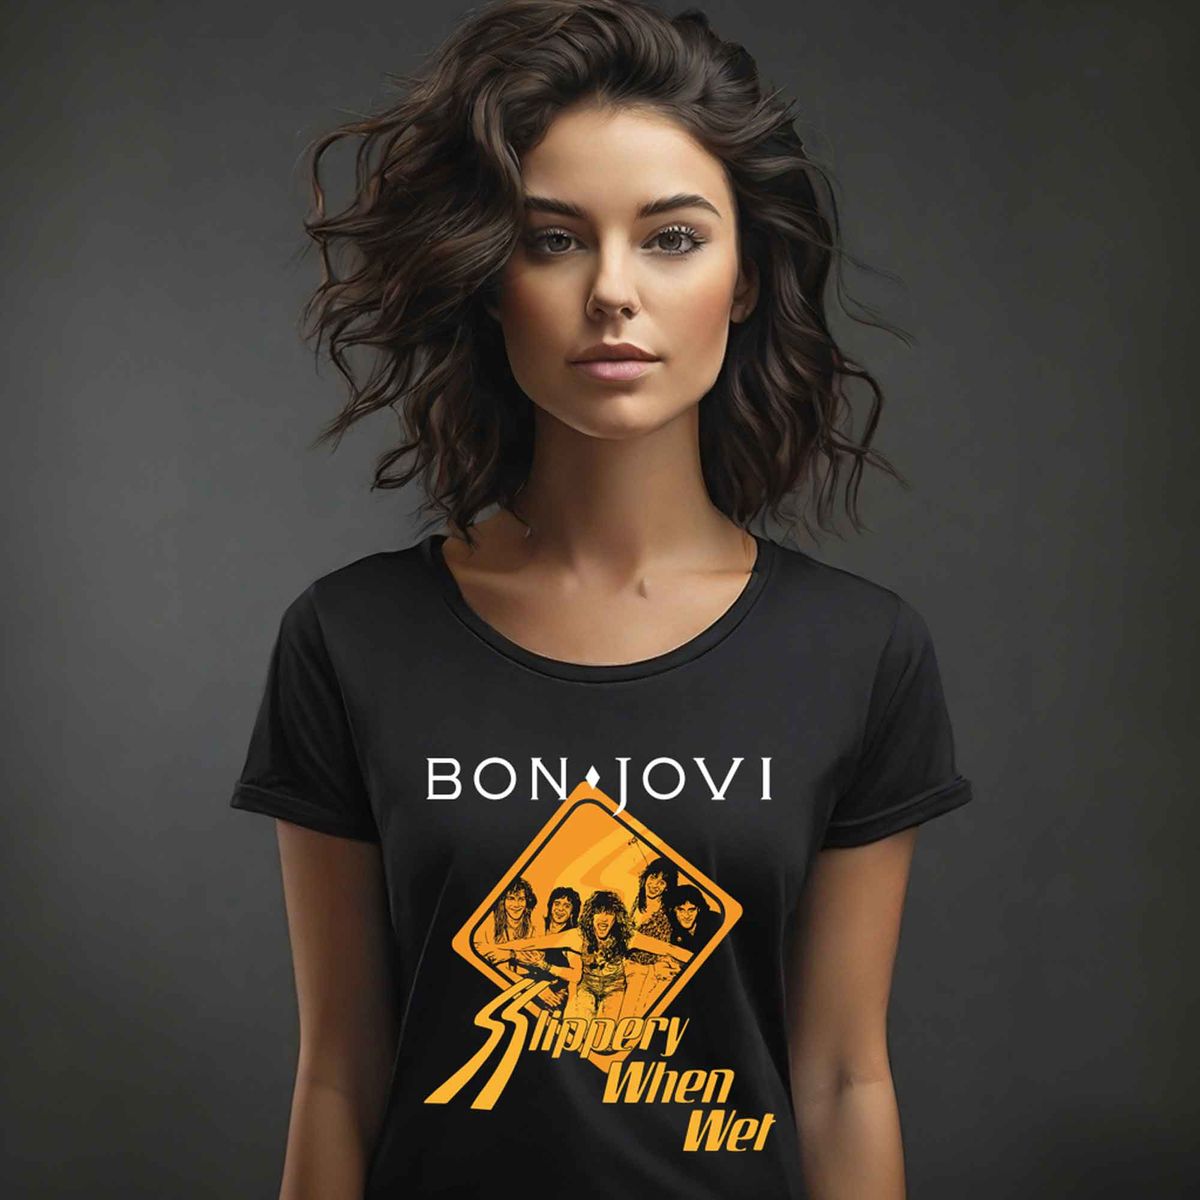 Nome do produto: Baby Long Bon Jovi - Slippery When Wet 2